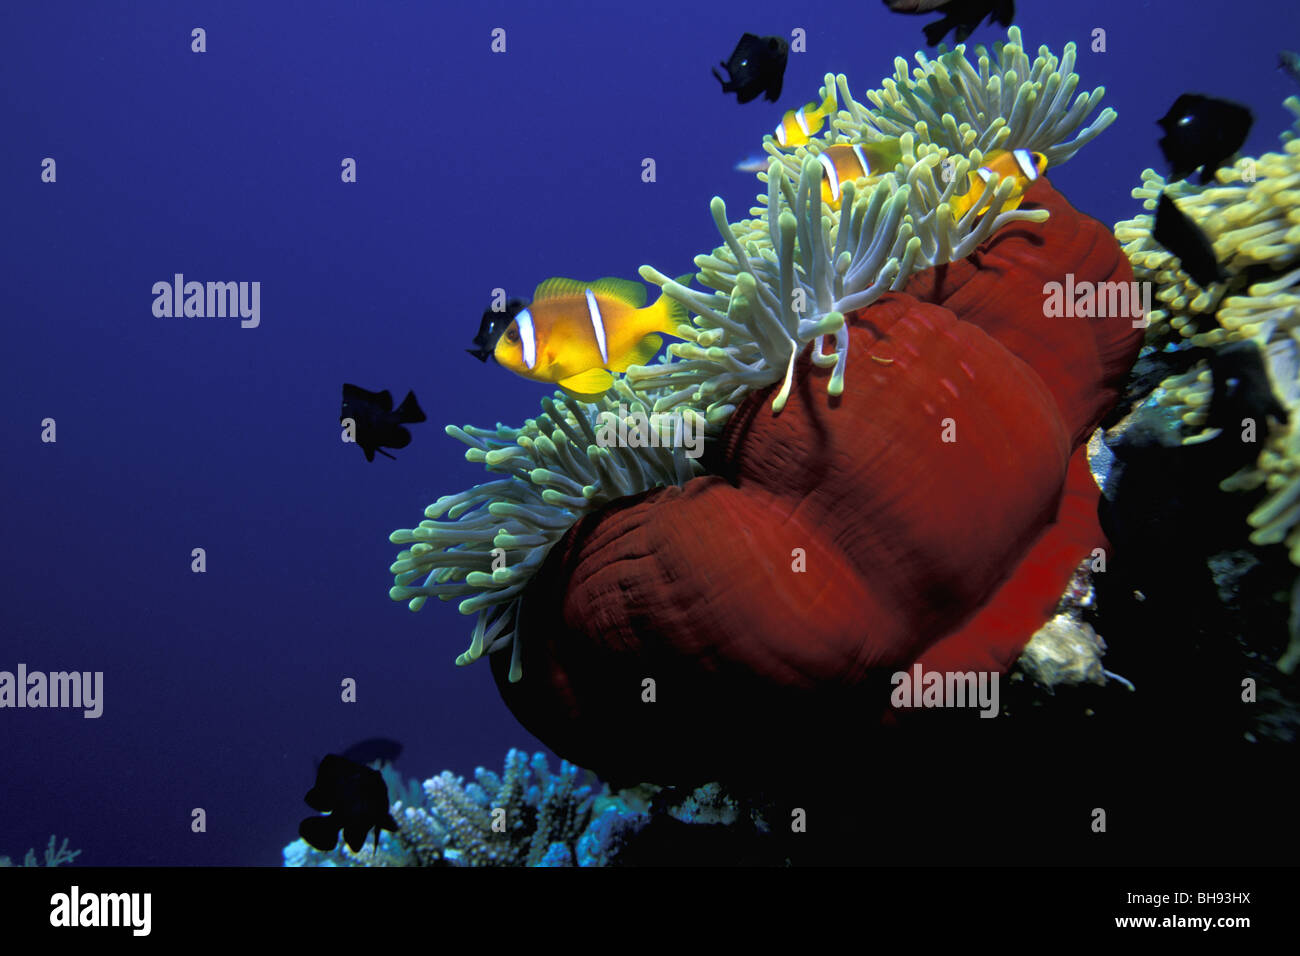 Mar Rosso Anemonefish nella magnifica Anemone, Amphiprion bicinctus, Heteractis magnifica, Mar Rosso, Arabia Saudita Foto Stock